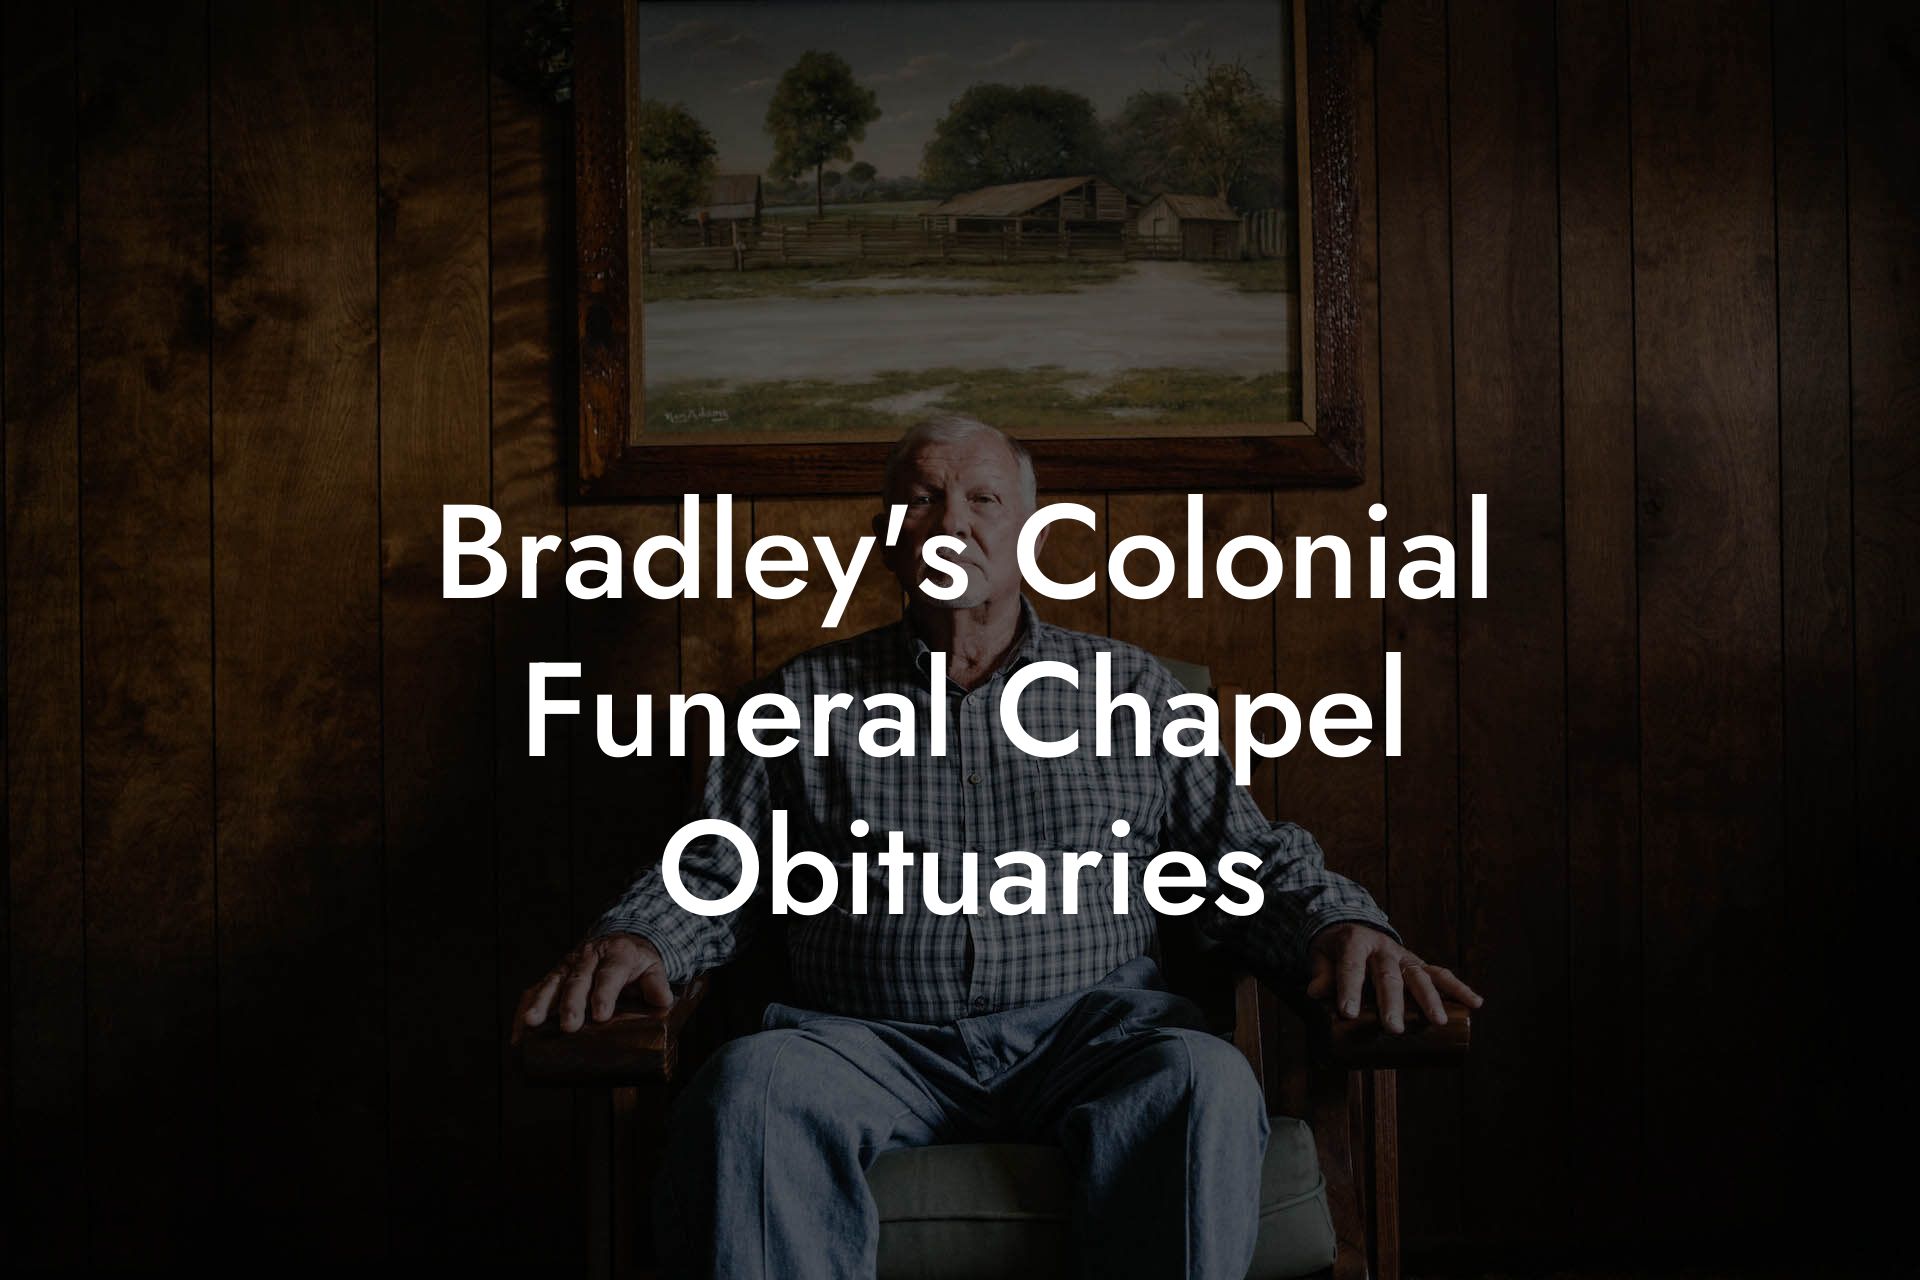 Bradley's Colonial Funeral Chapel Obituaries